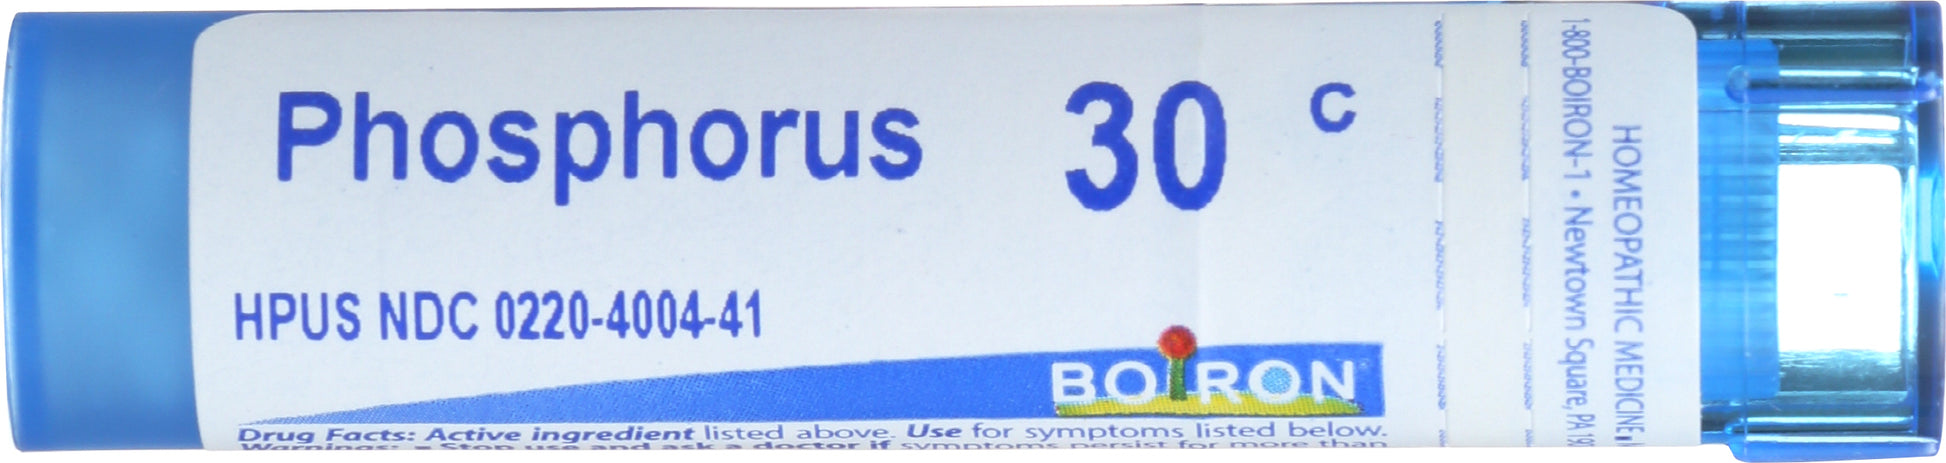 Boiron Phosphorus 30c